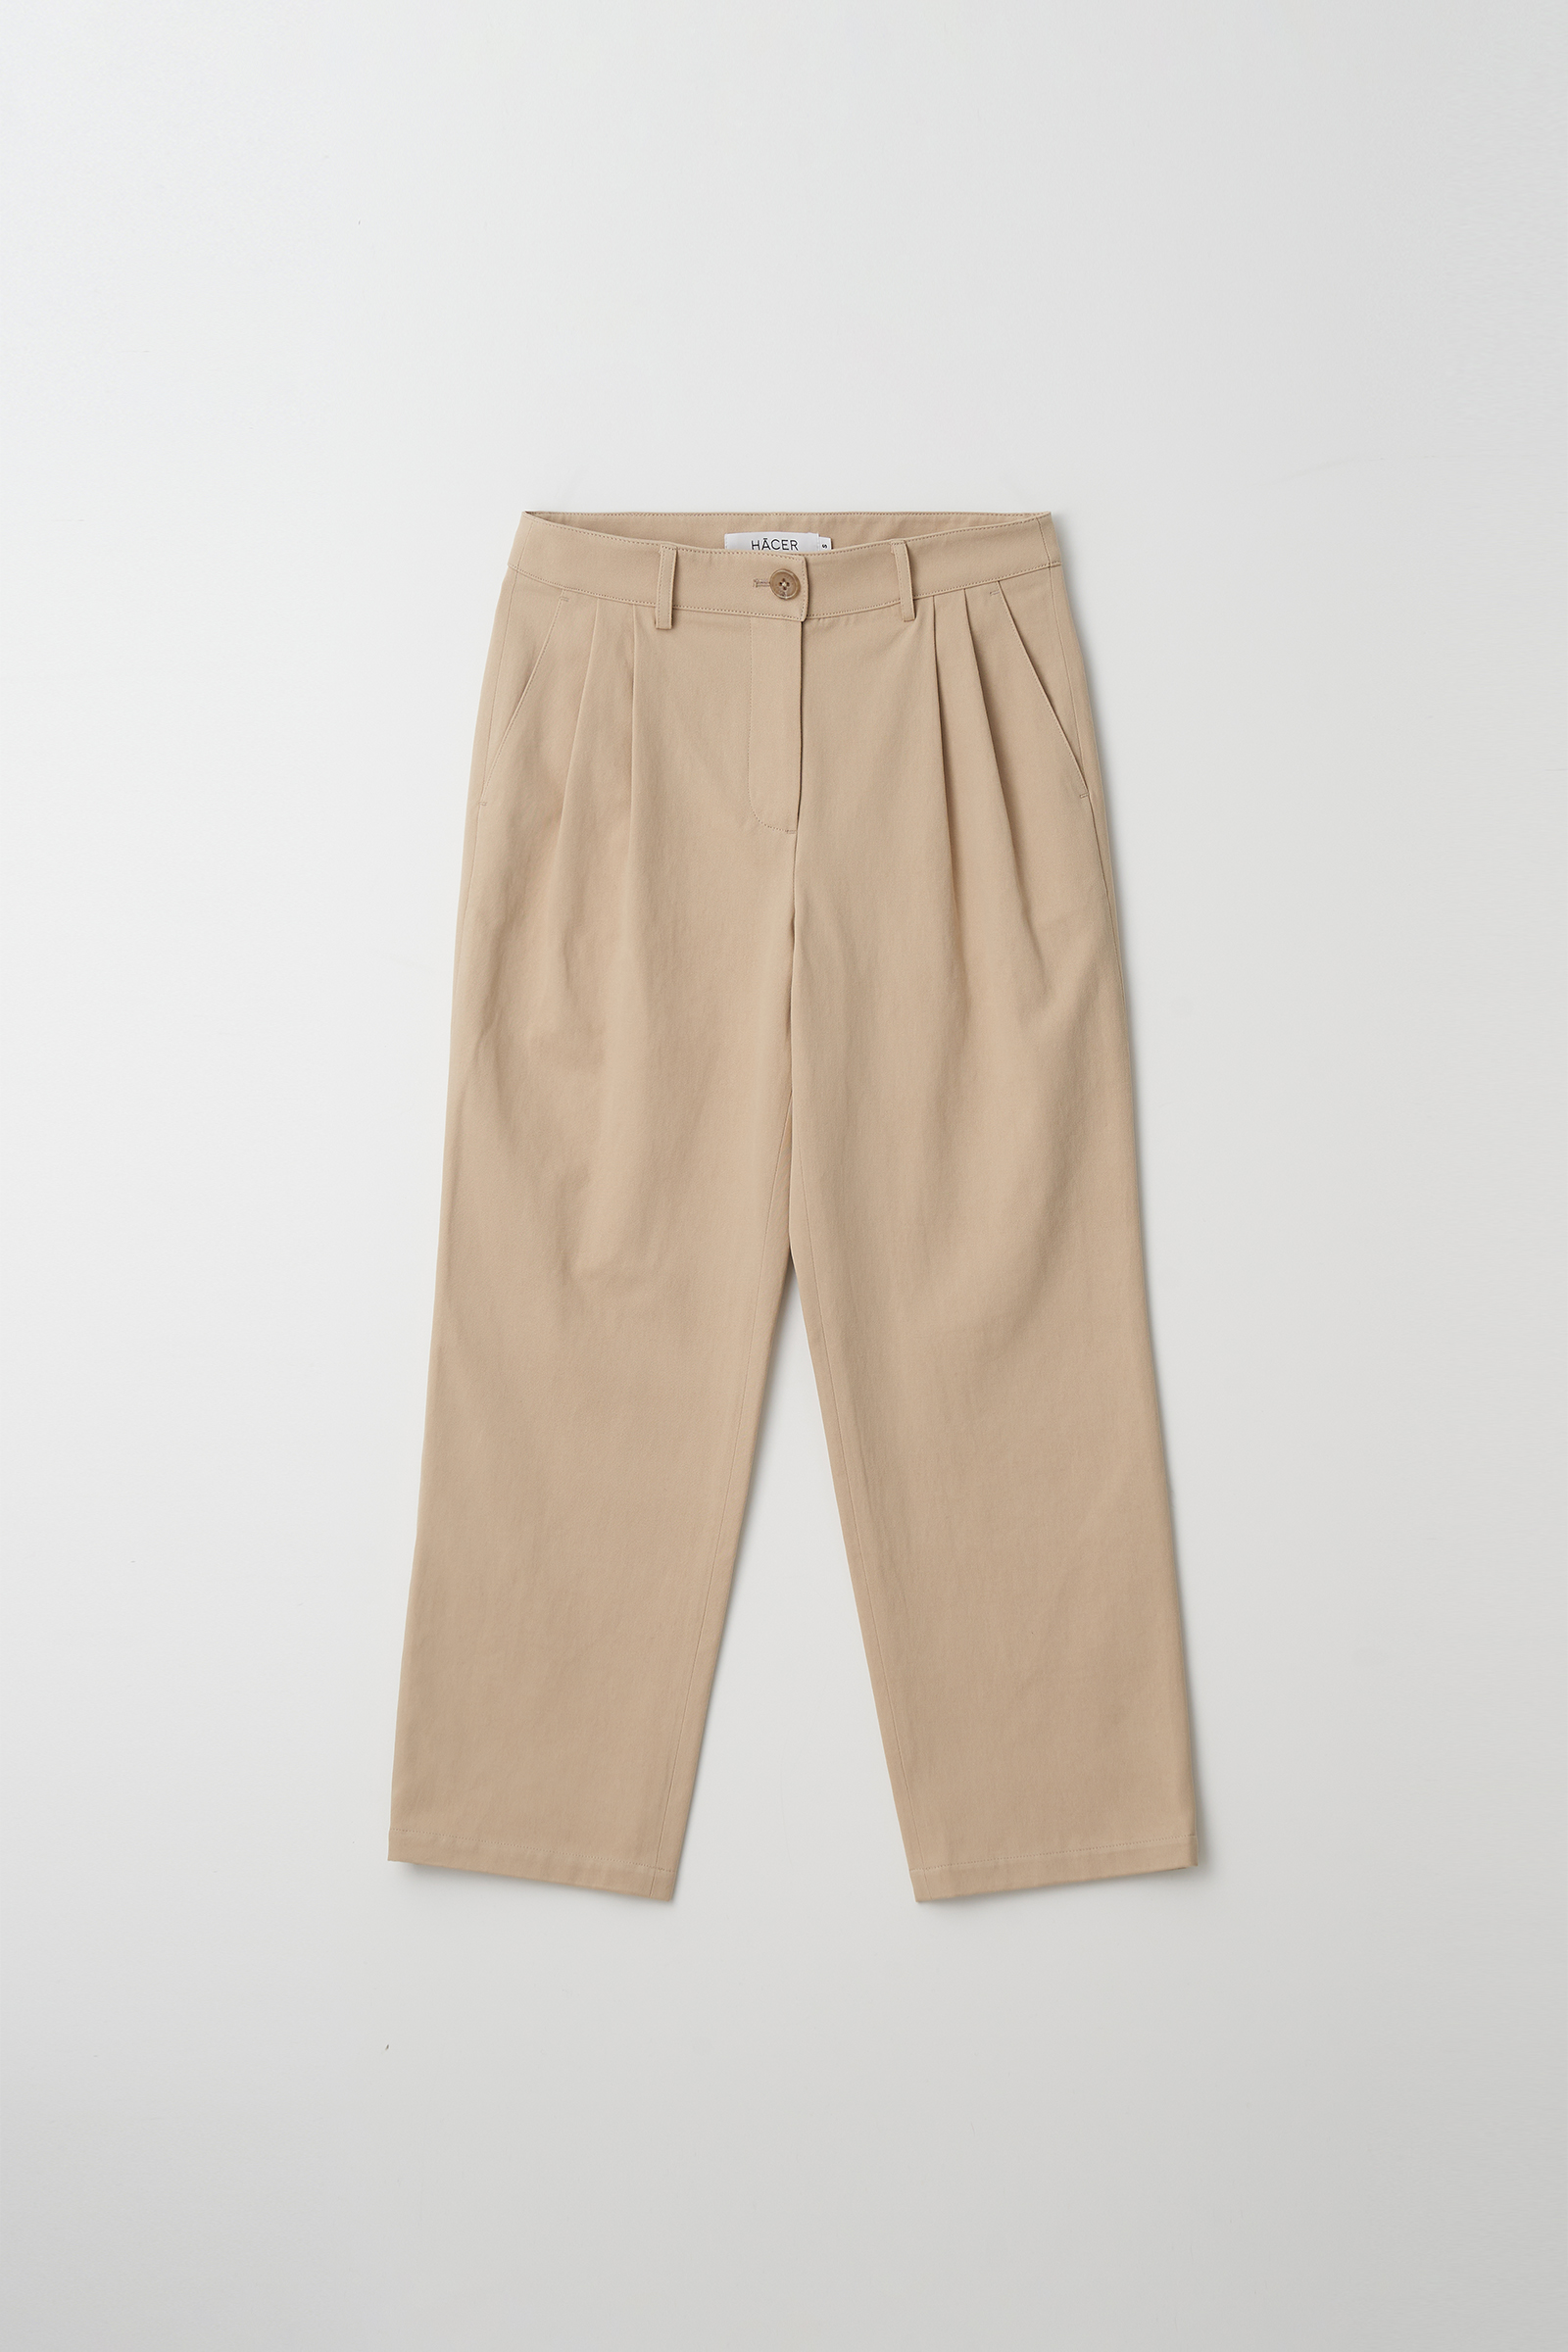 [2nd] Aiden Cotton Pants